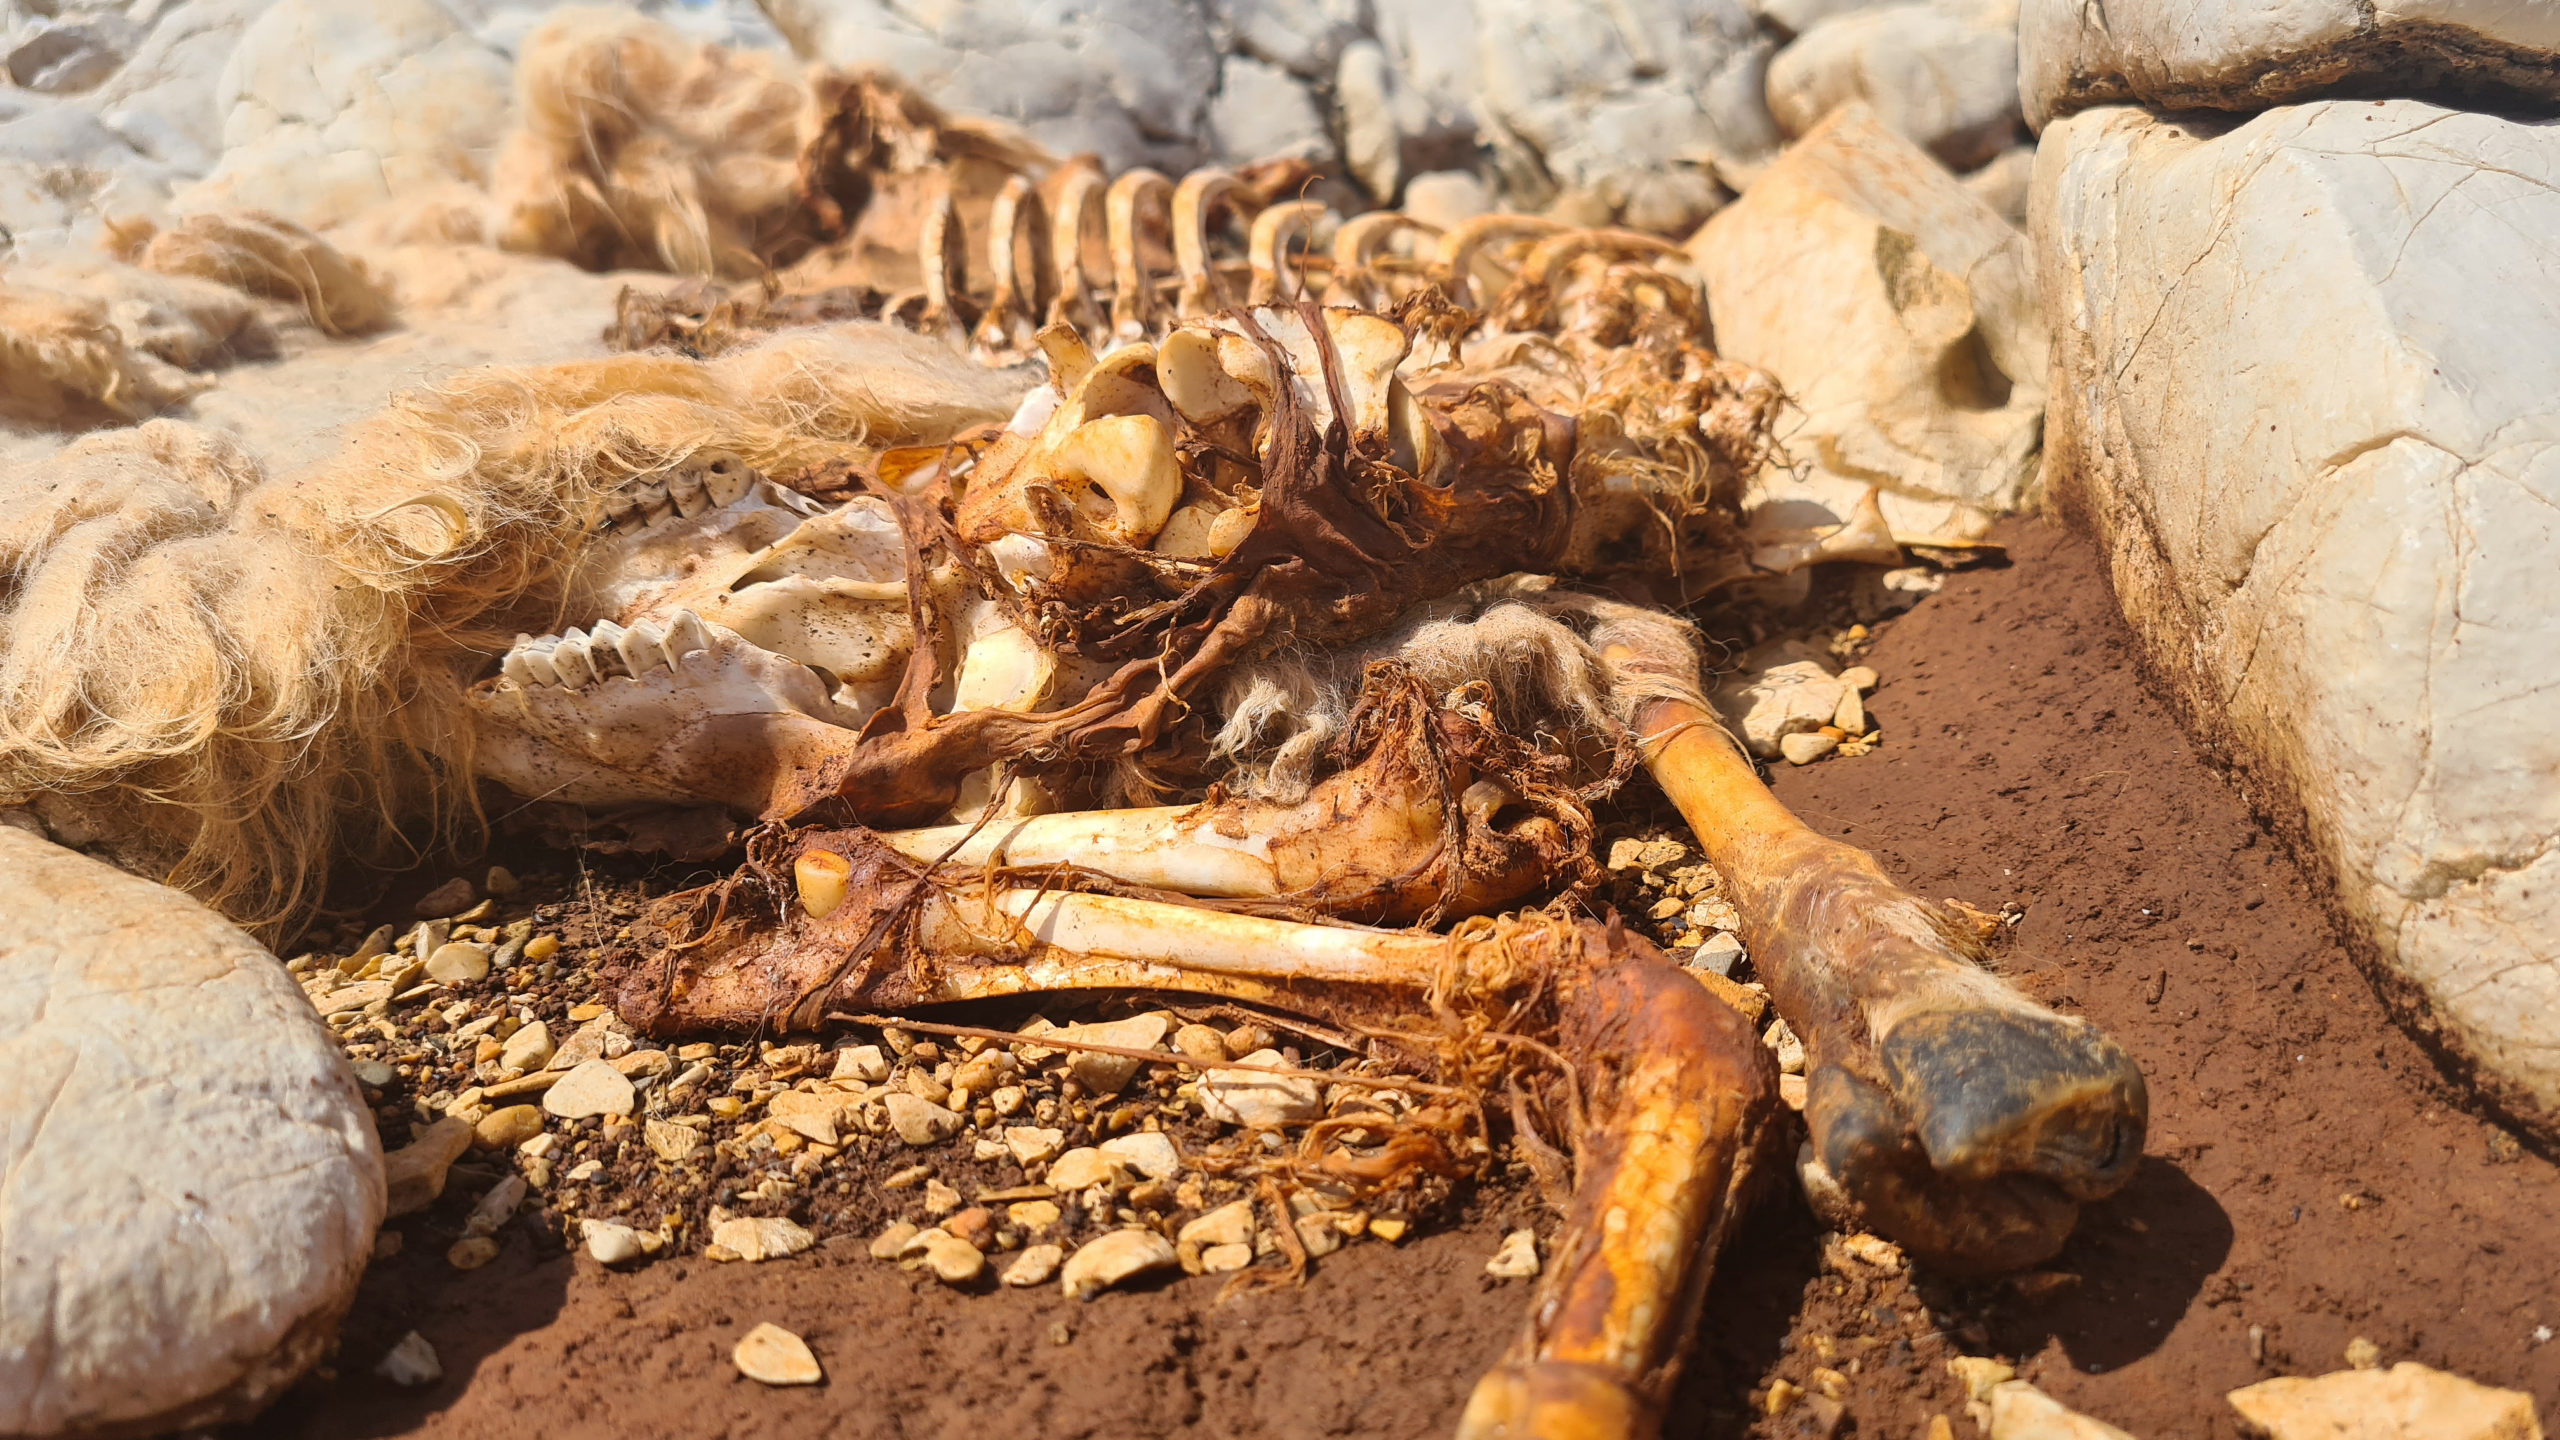 Sheep skeleton decomposing on dirty ground.